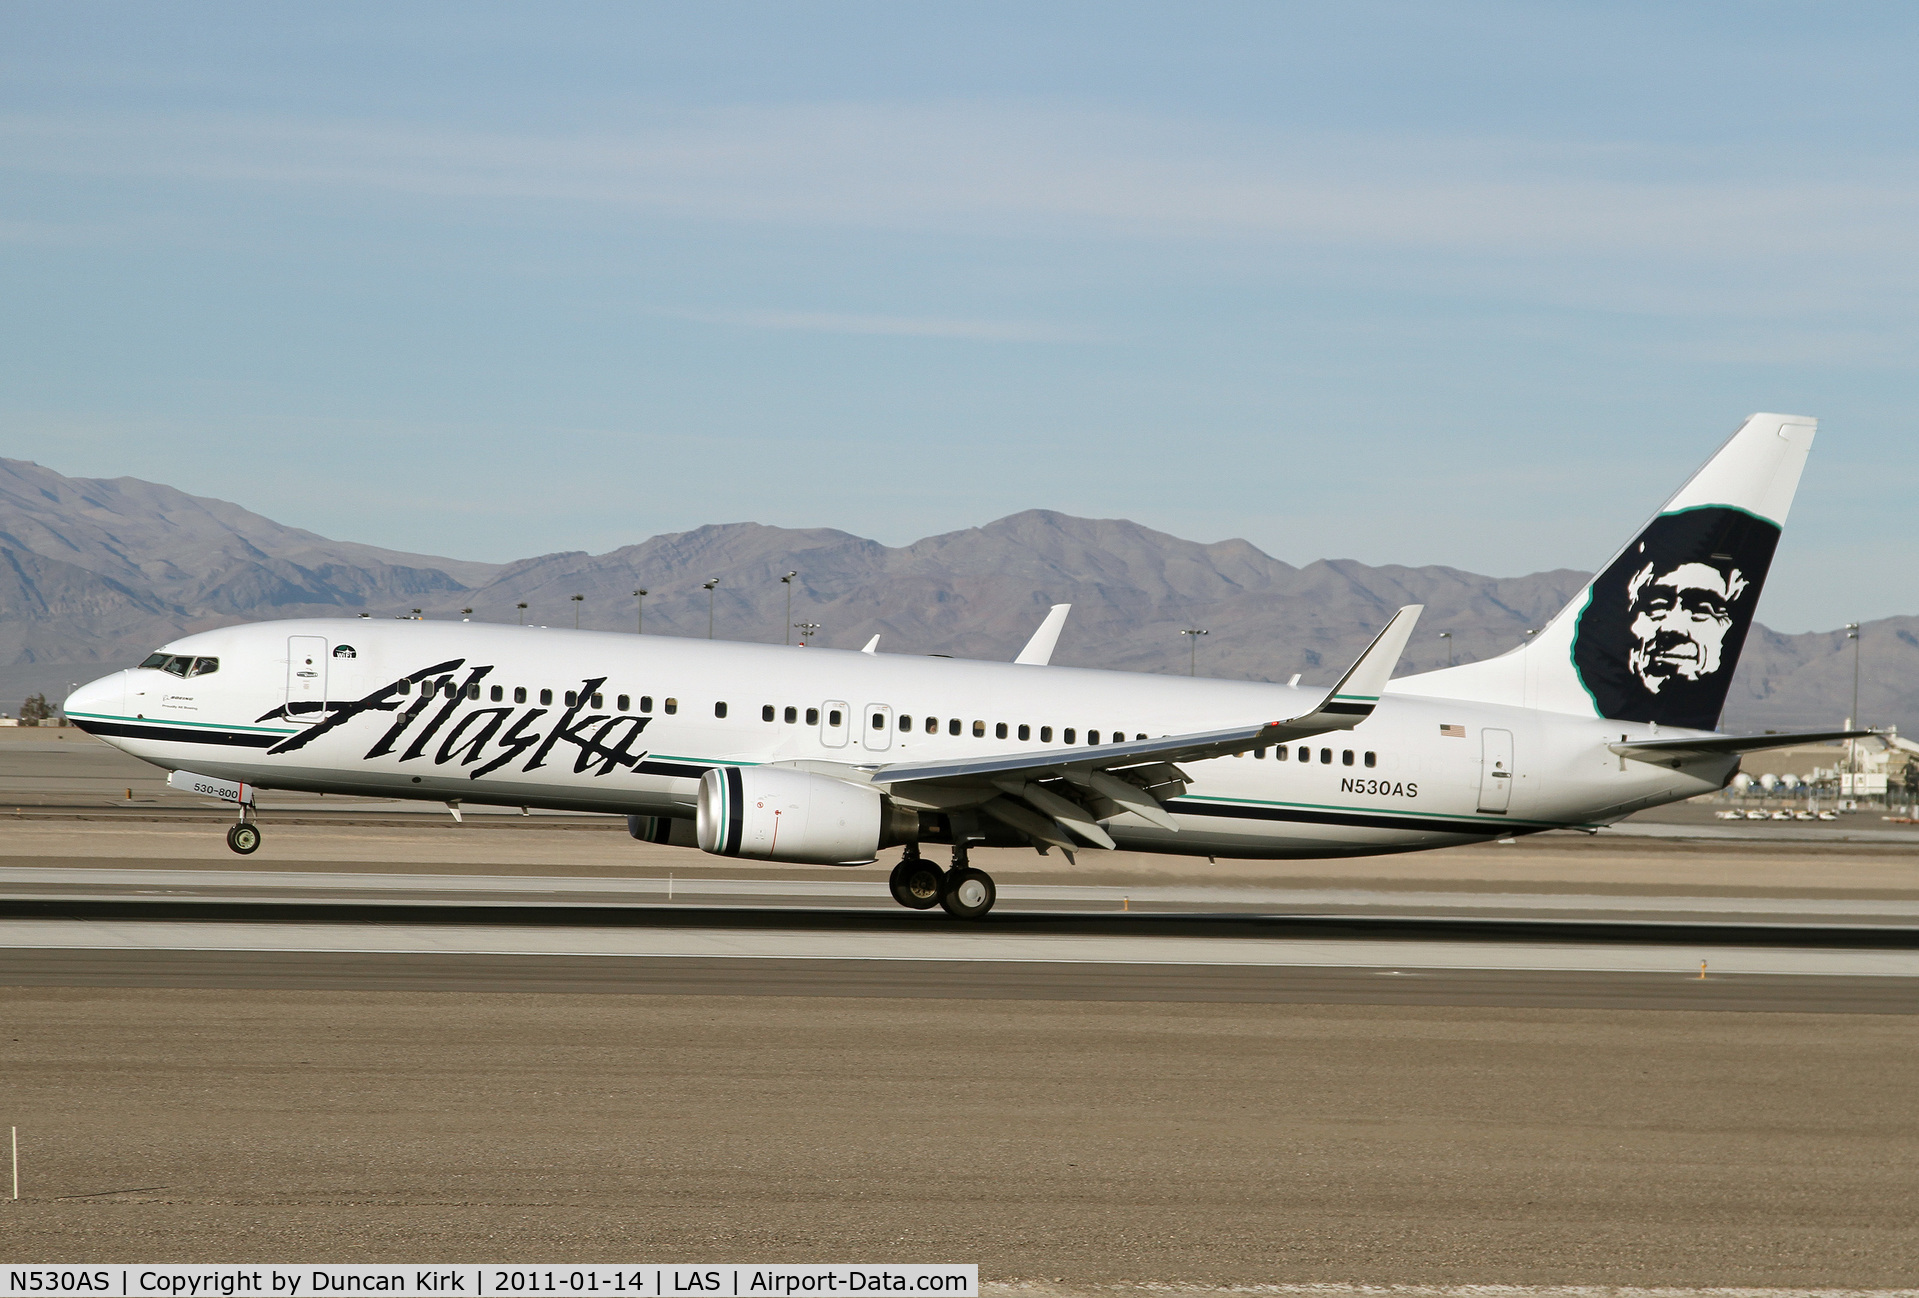 N530AS, 2010 Boeing 737-890 C/N 36578, Alaska's presence is more noticeable these days